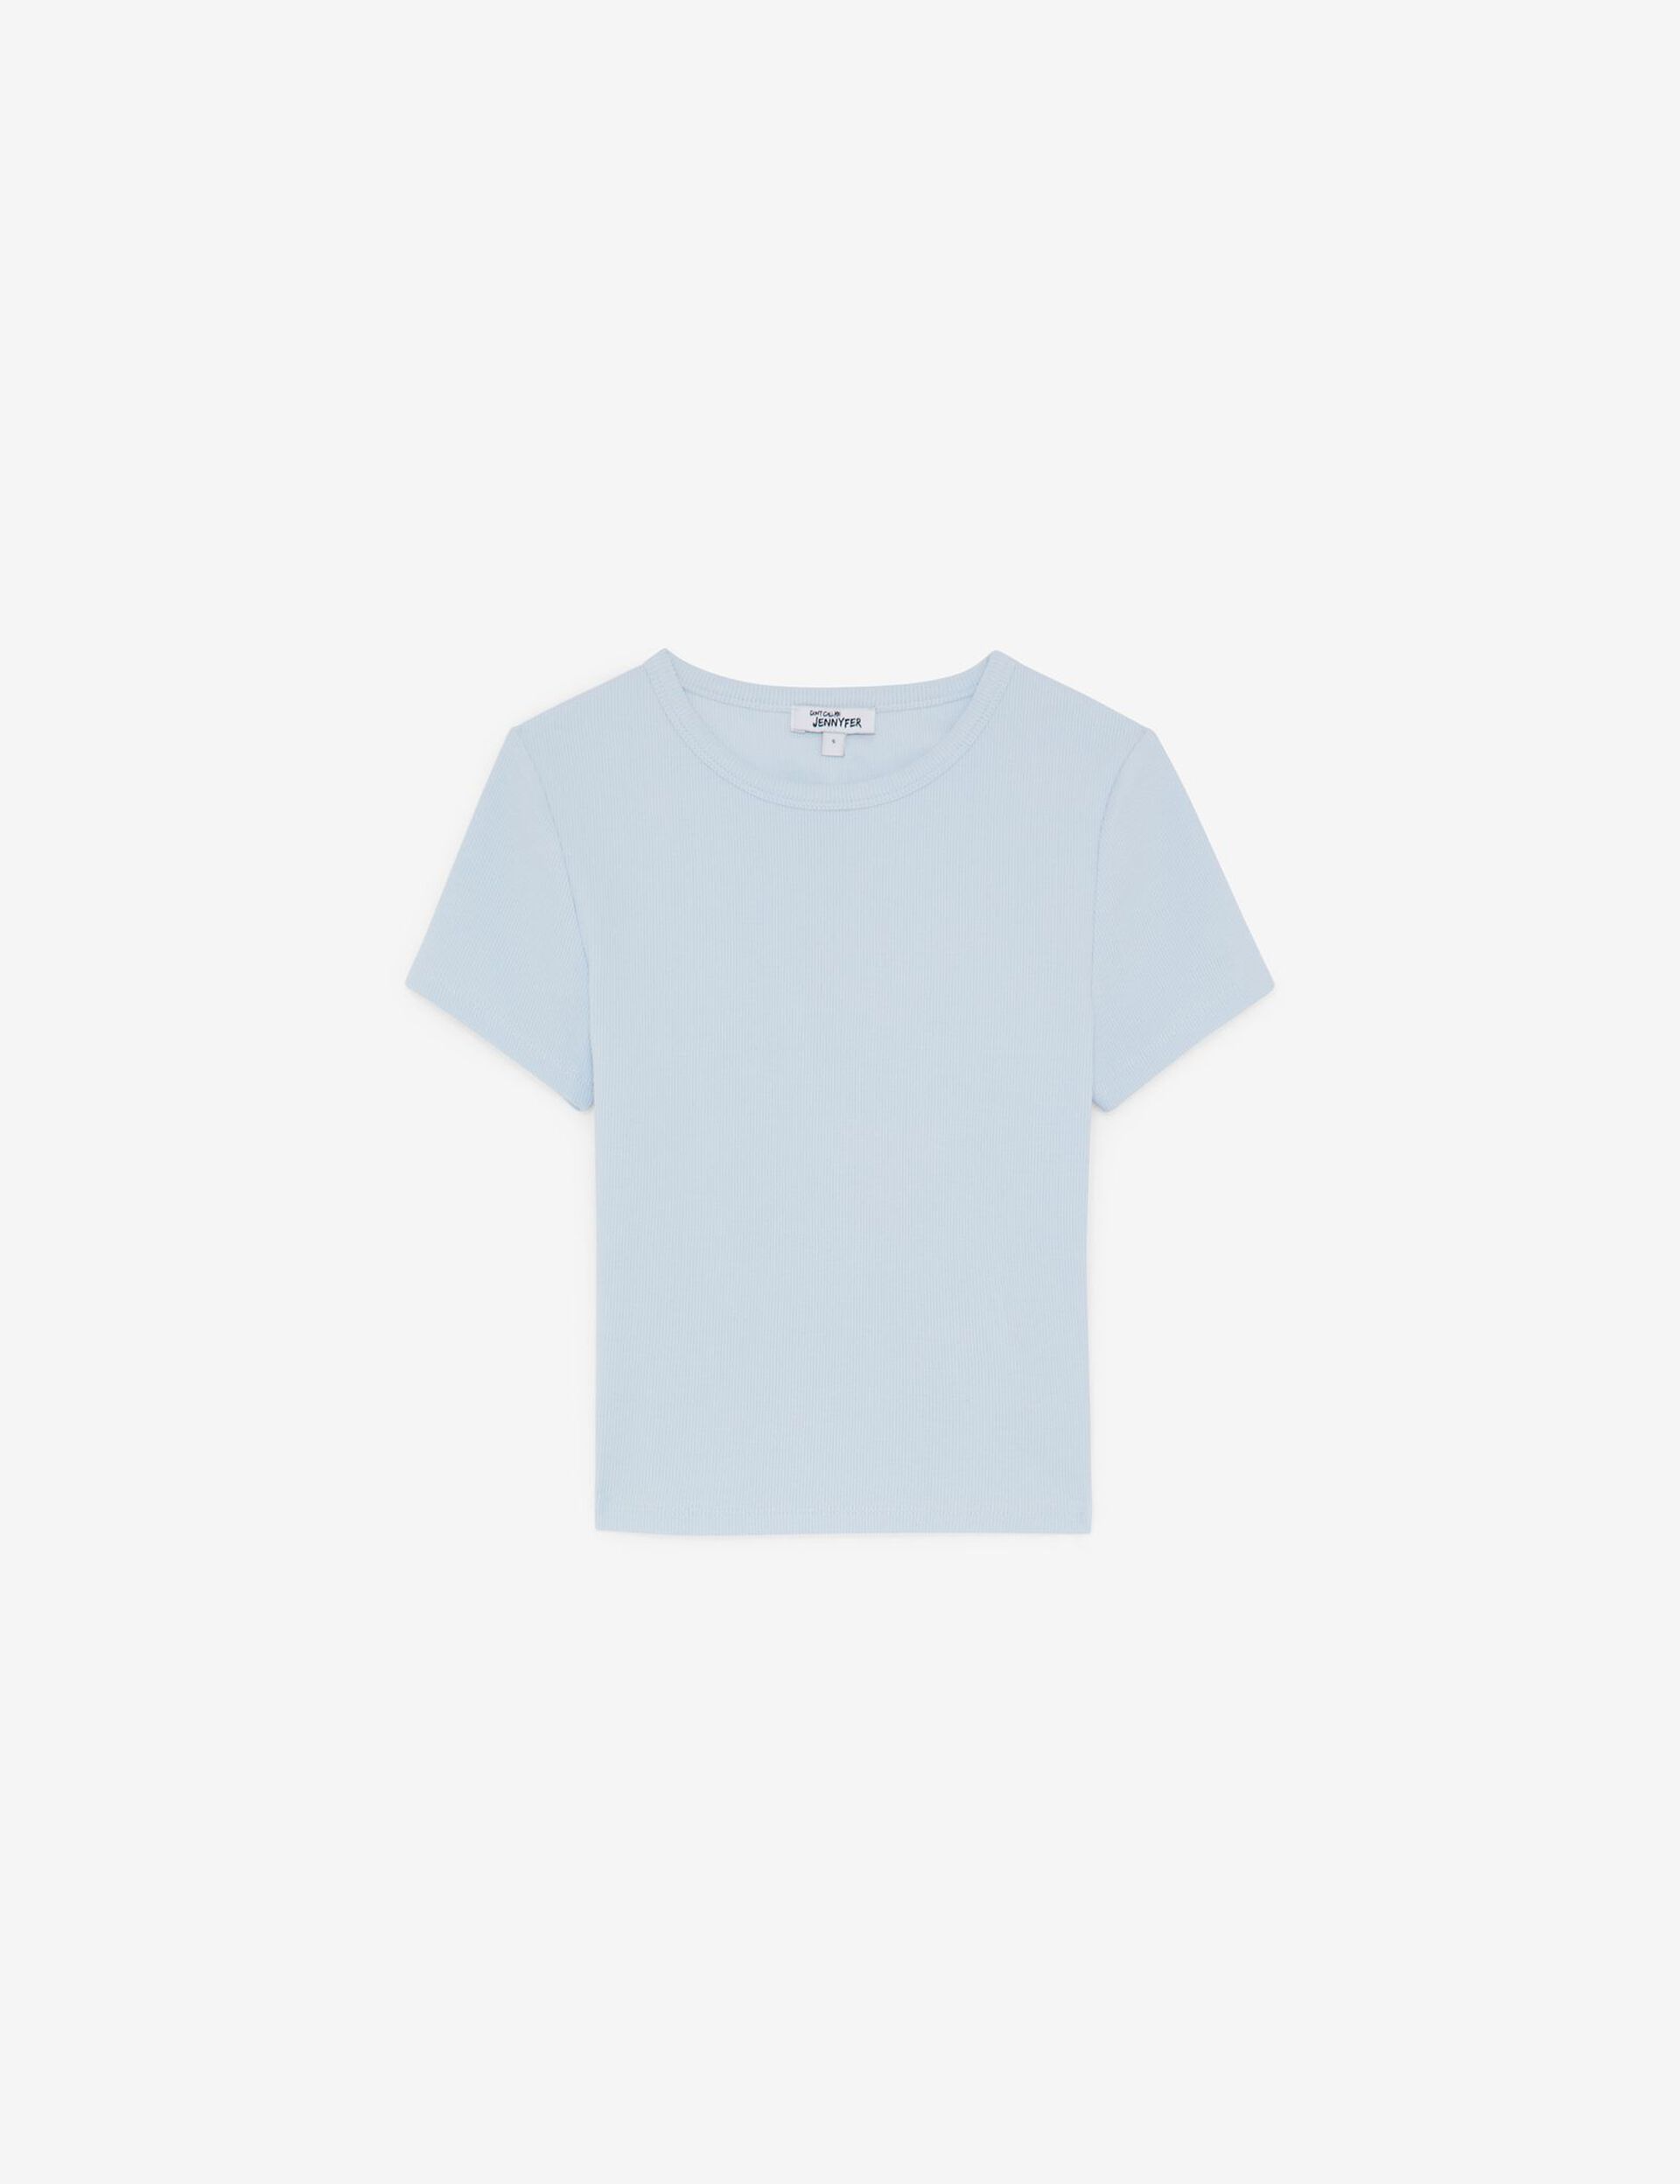 Tee-shirt basic bleu ciel côtelée